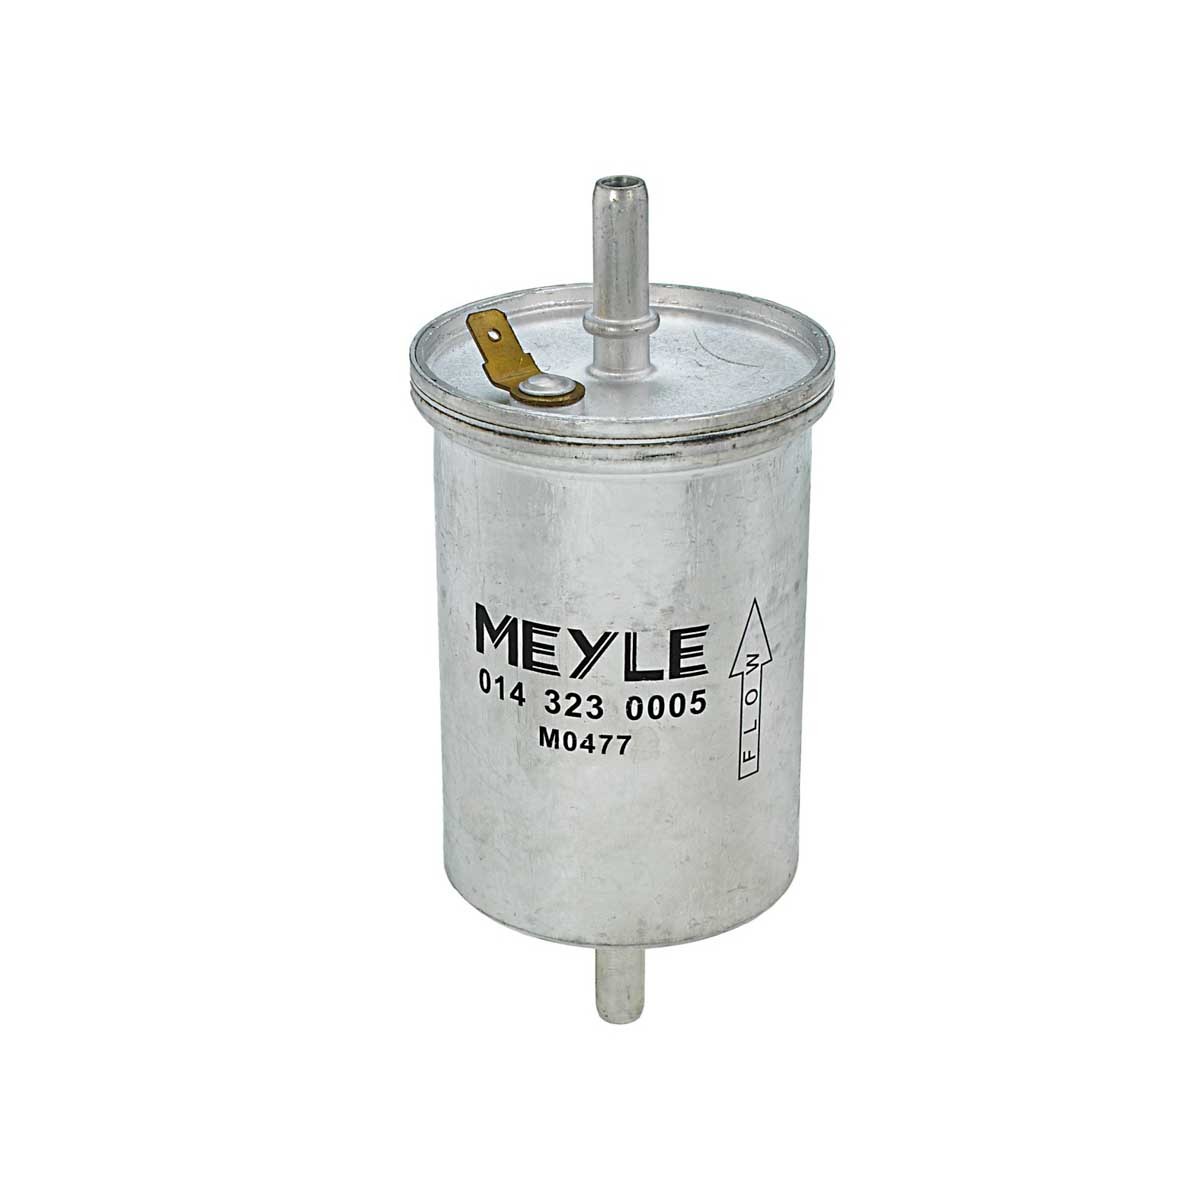 MFF0015 MEYLE In-Line Filter, ORIGINAL Quality Height: 136,5mm Inline fuel filter 014 323 0005 buy